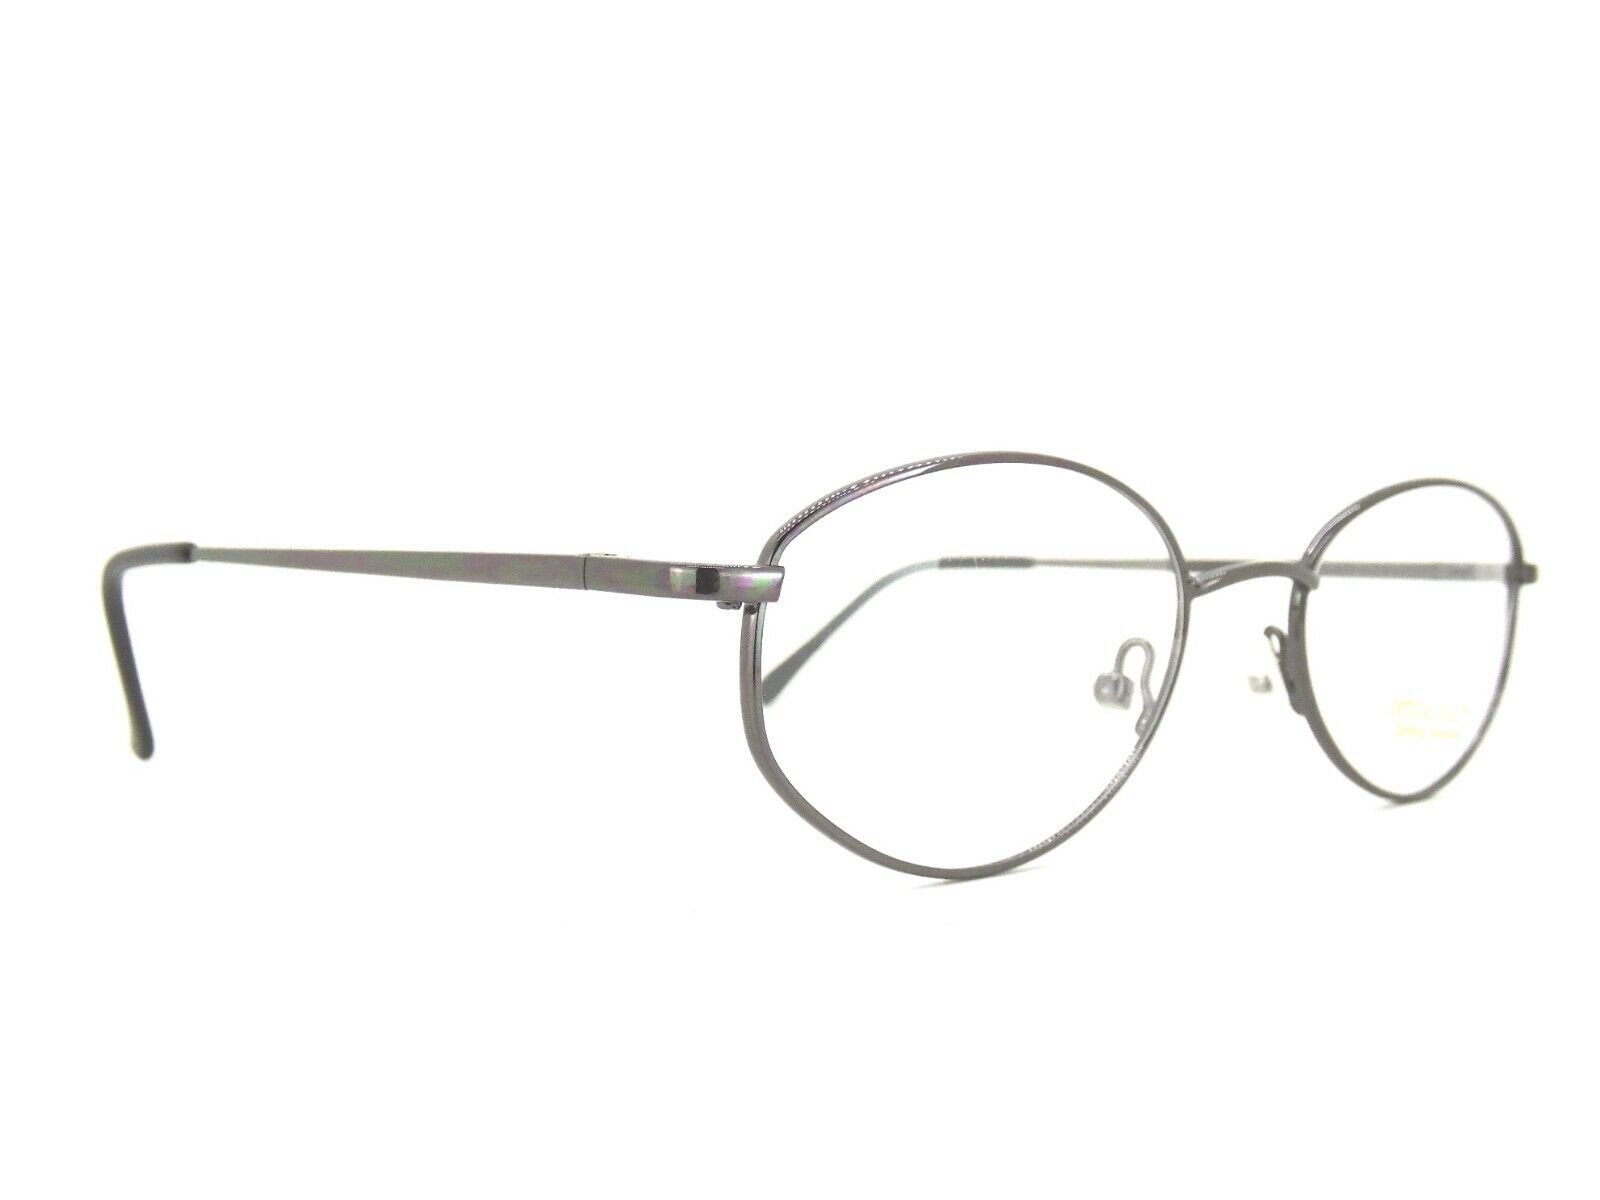 Designer Eyeglasses Brille Federbügel Spring Temples goggles SUNOPTIC 81 NEU NEW